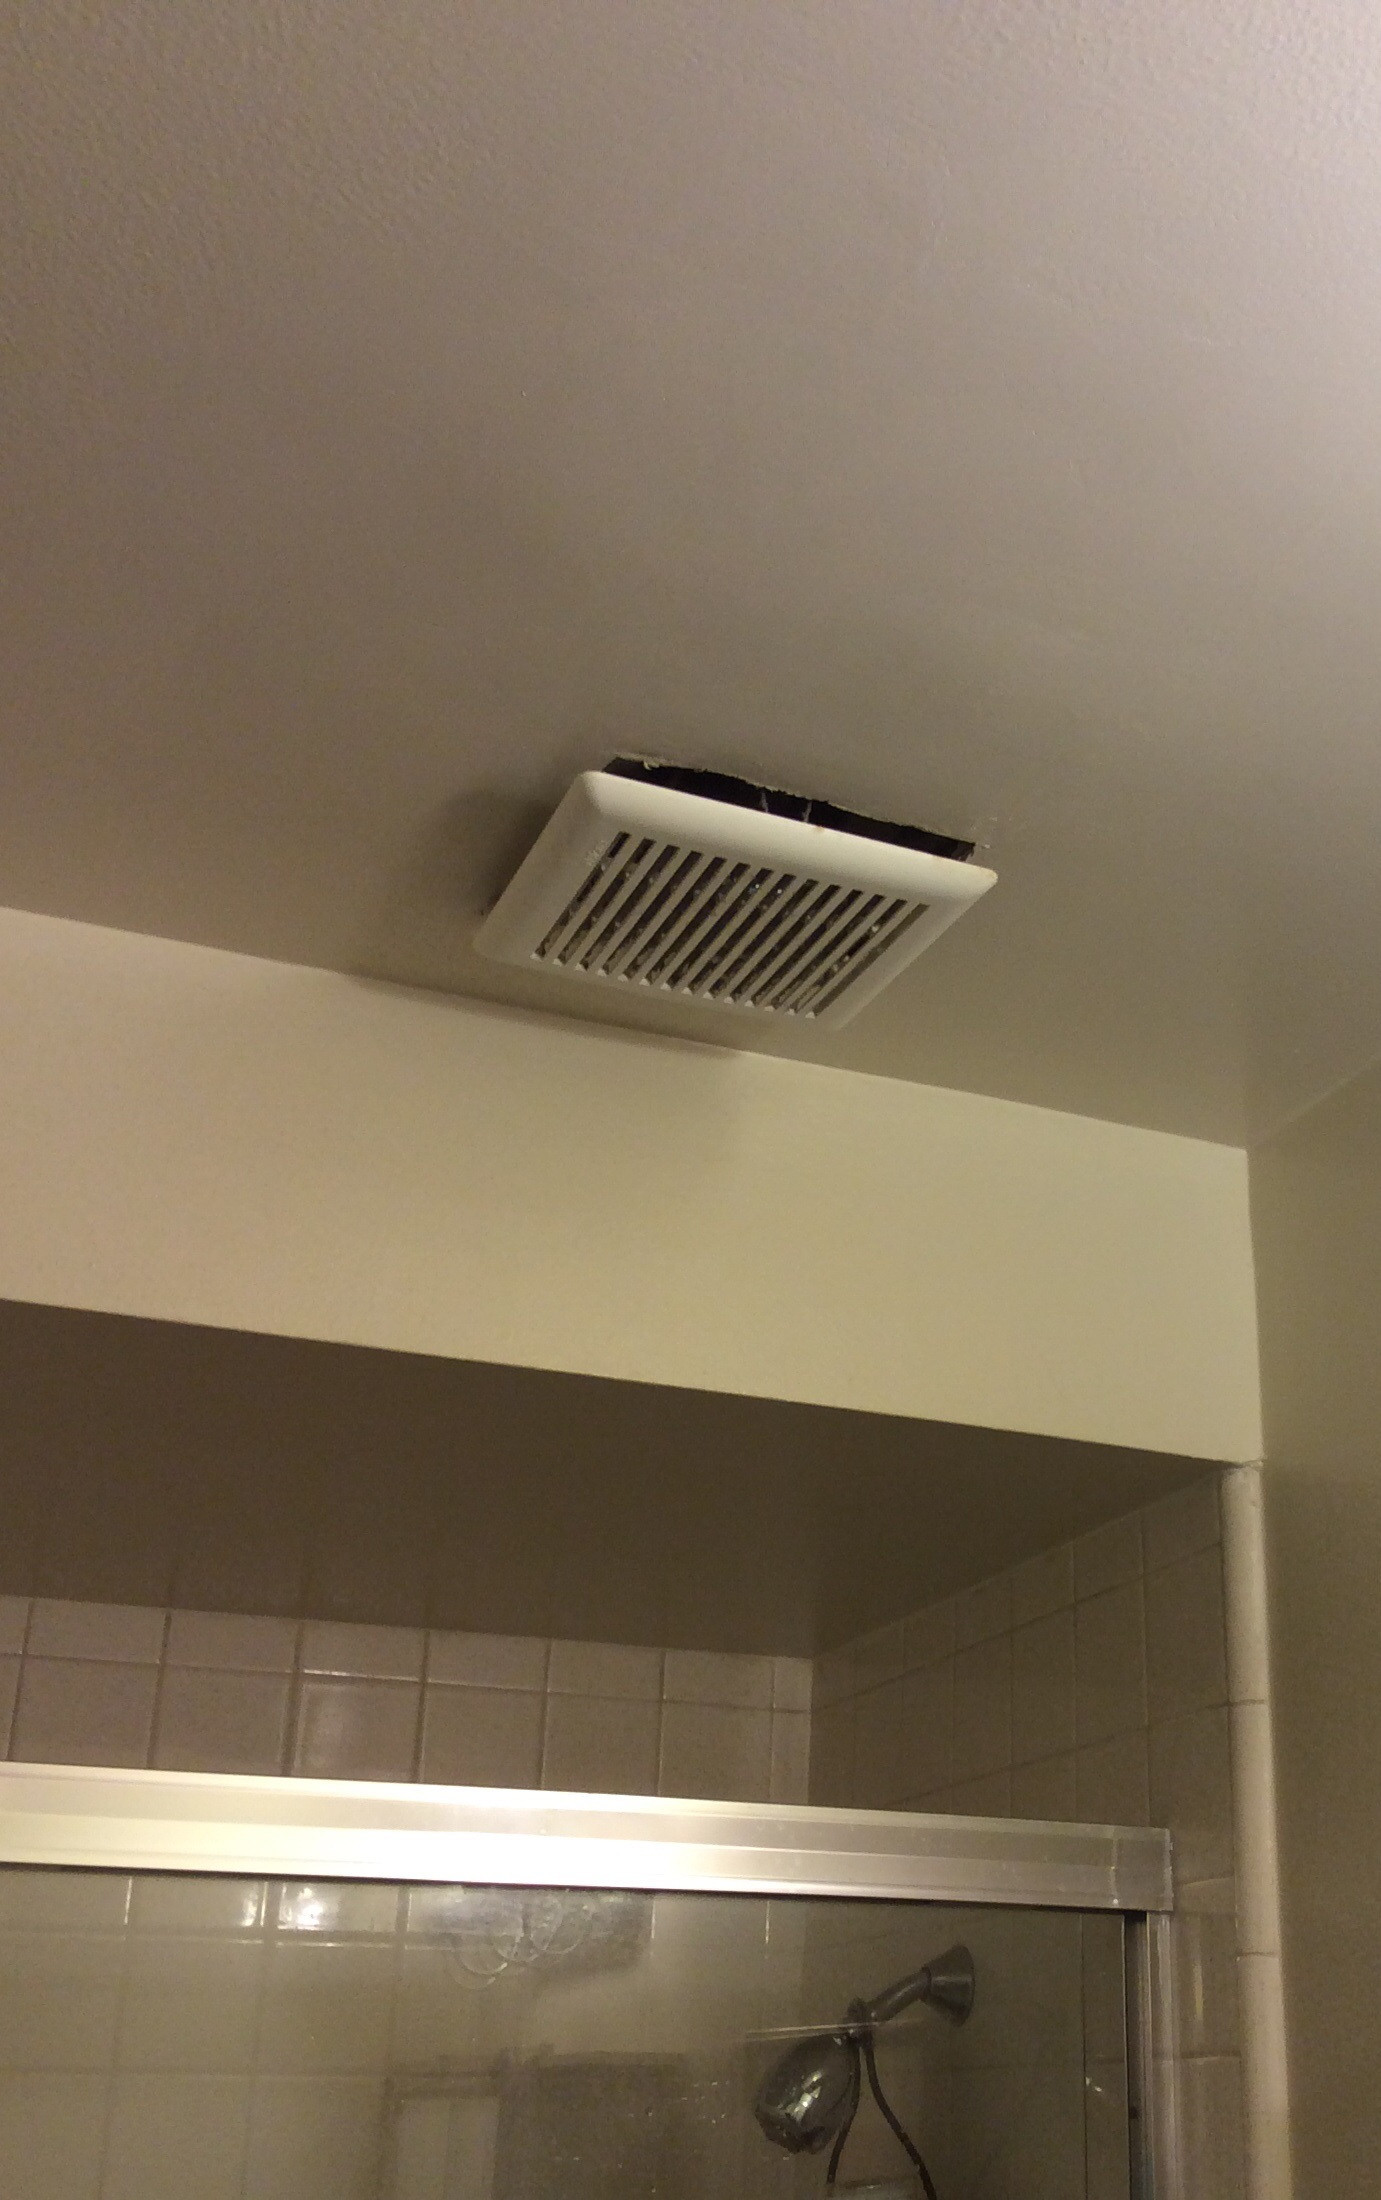 Exhaust Fan Bathroom
 bathroom Is it normal for an exhaust fan cover to hang